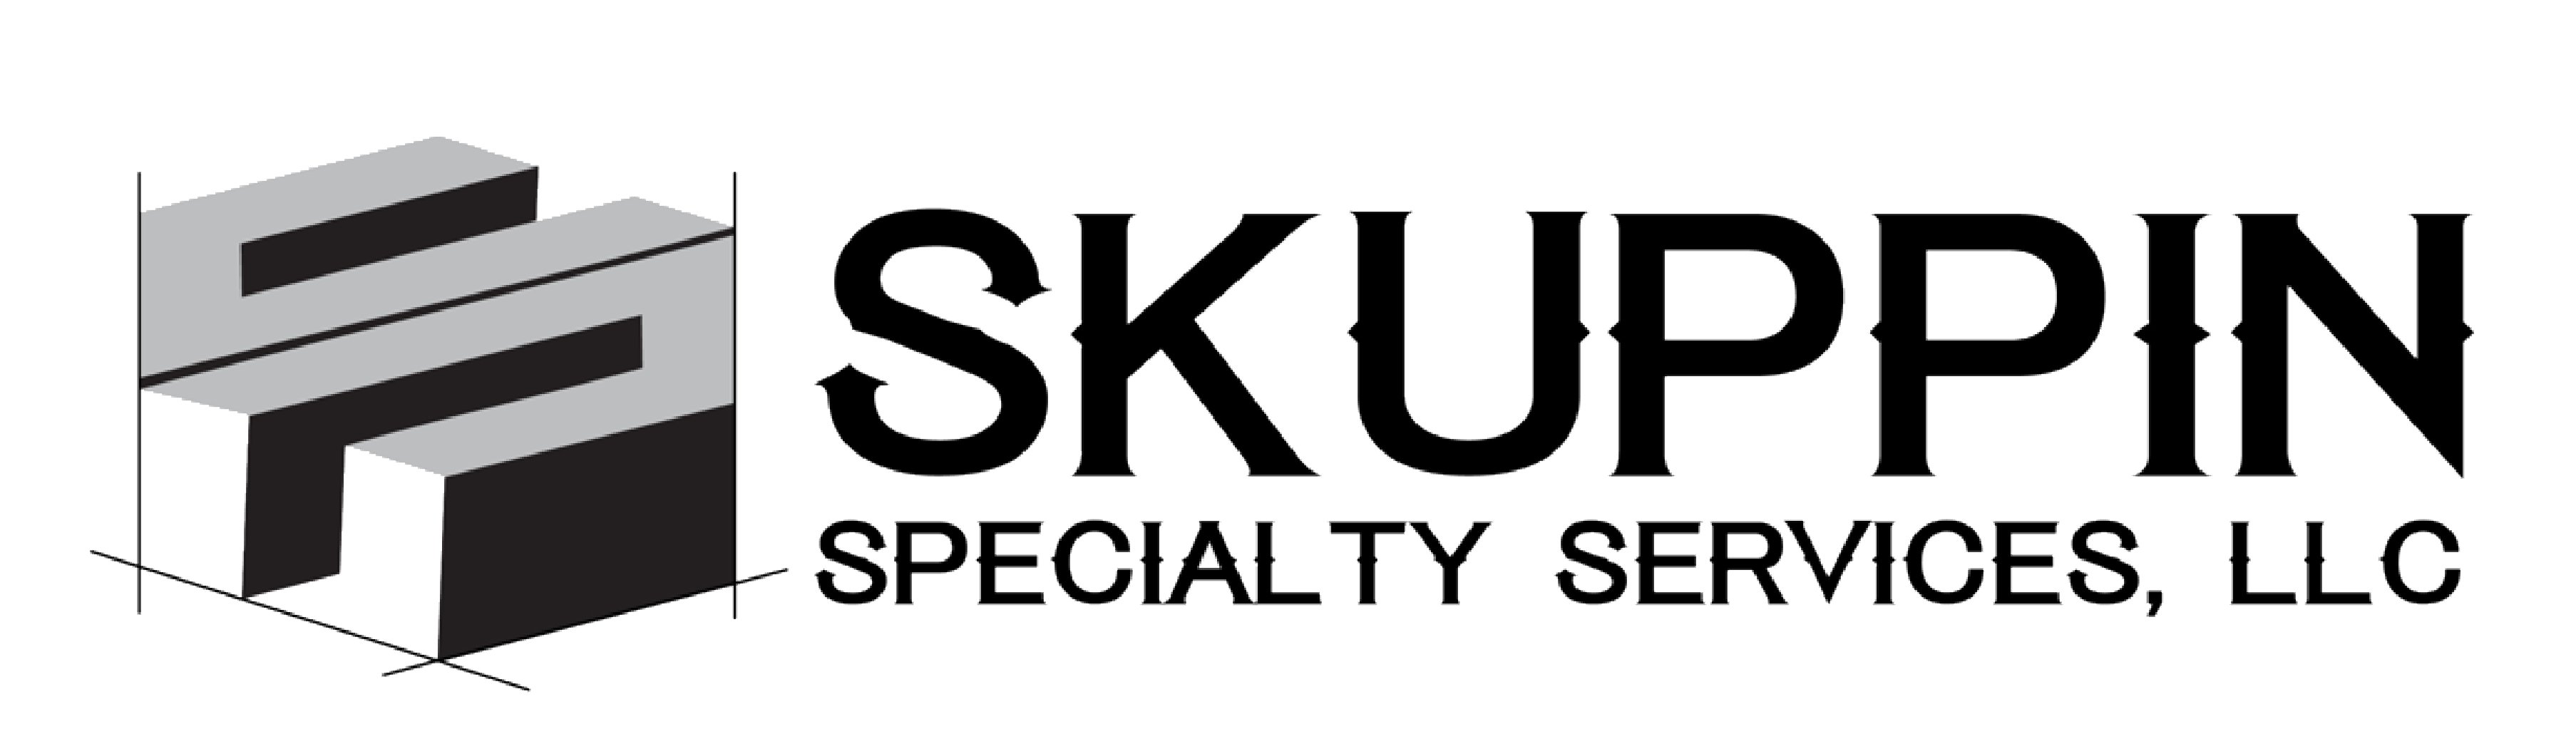 Skuppin Specialty Services Logo